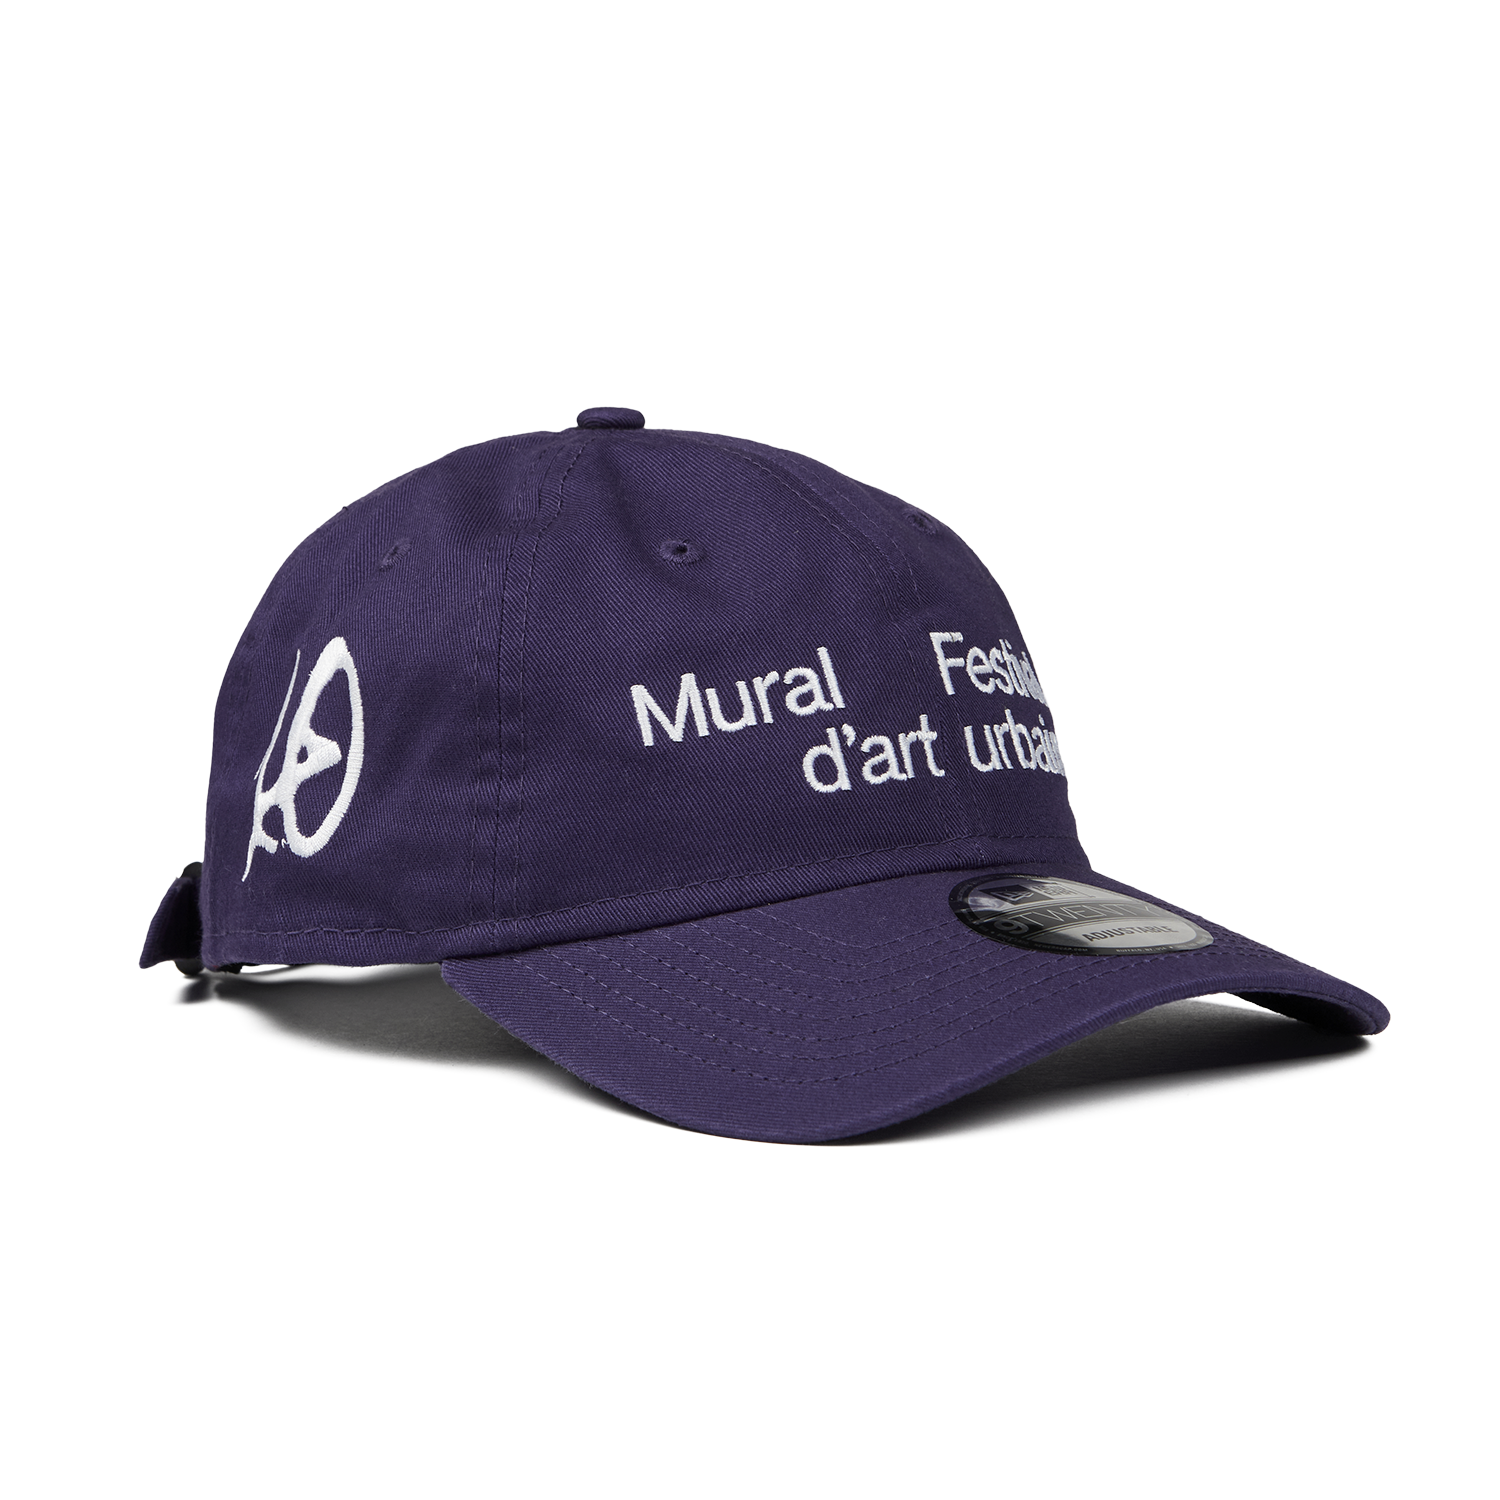 MURAL x New Era Festival d'art Urbain Cap - True Purple